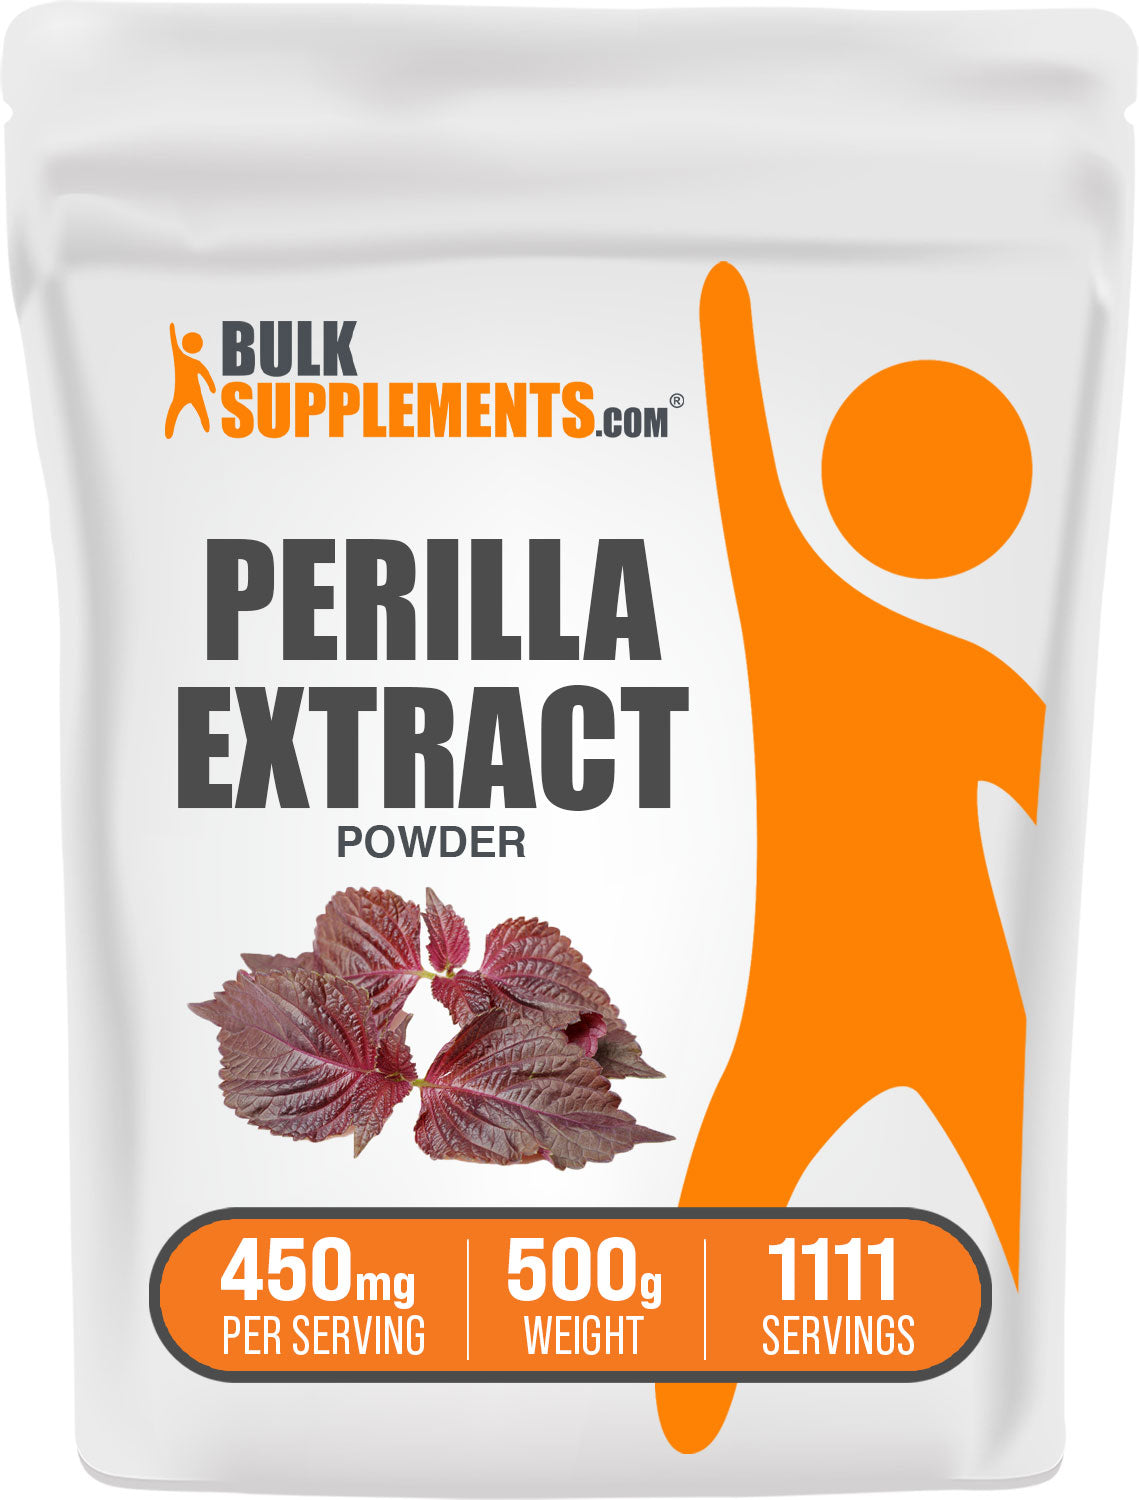 Perilla Extract 500g Bag